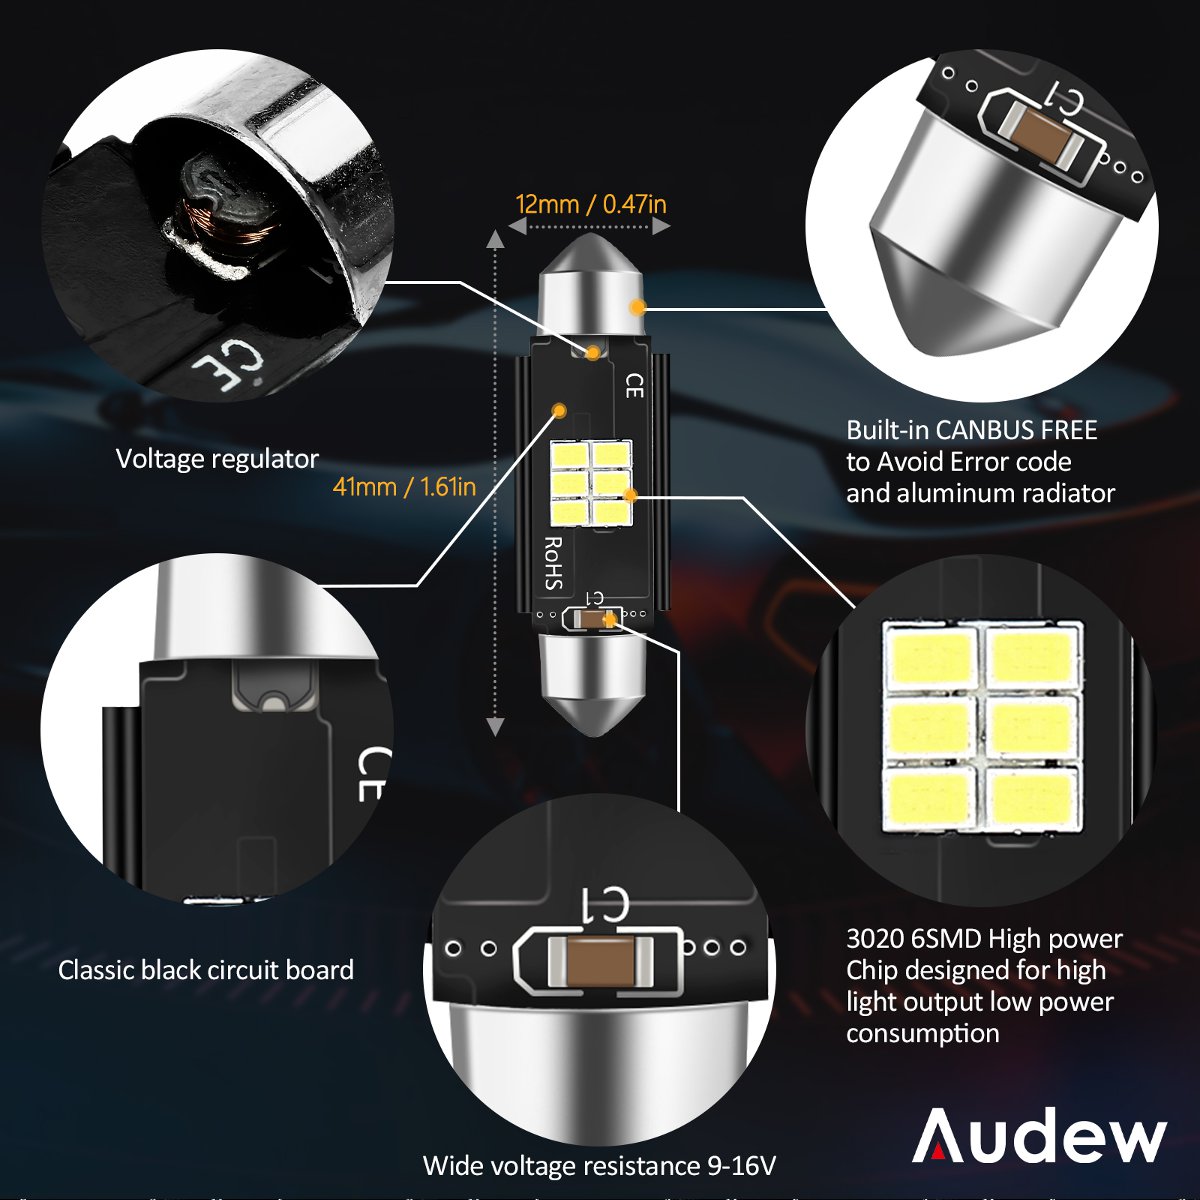 Audew 16PCS T10 C5W T15/912/921 LED Canbus Car Dome Interior Map Light License Plate Lamp